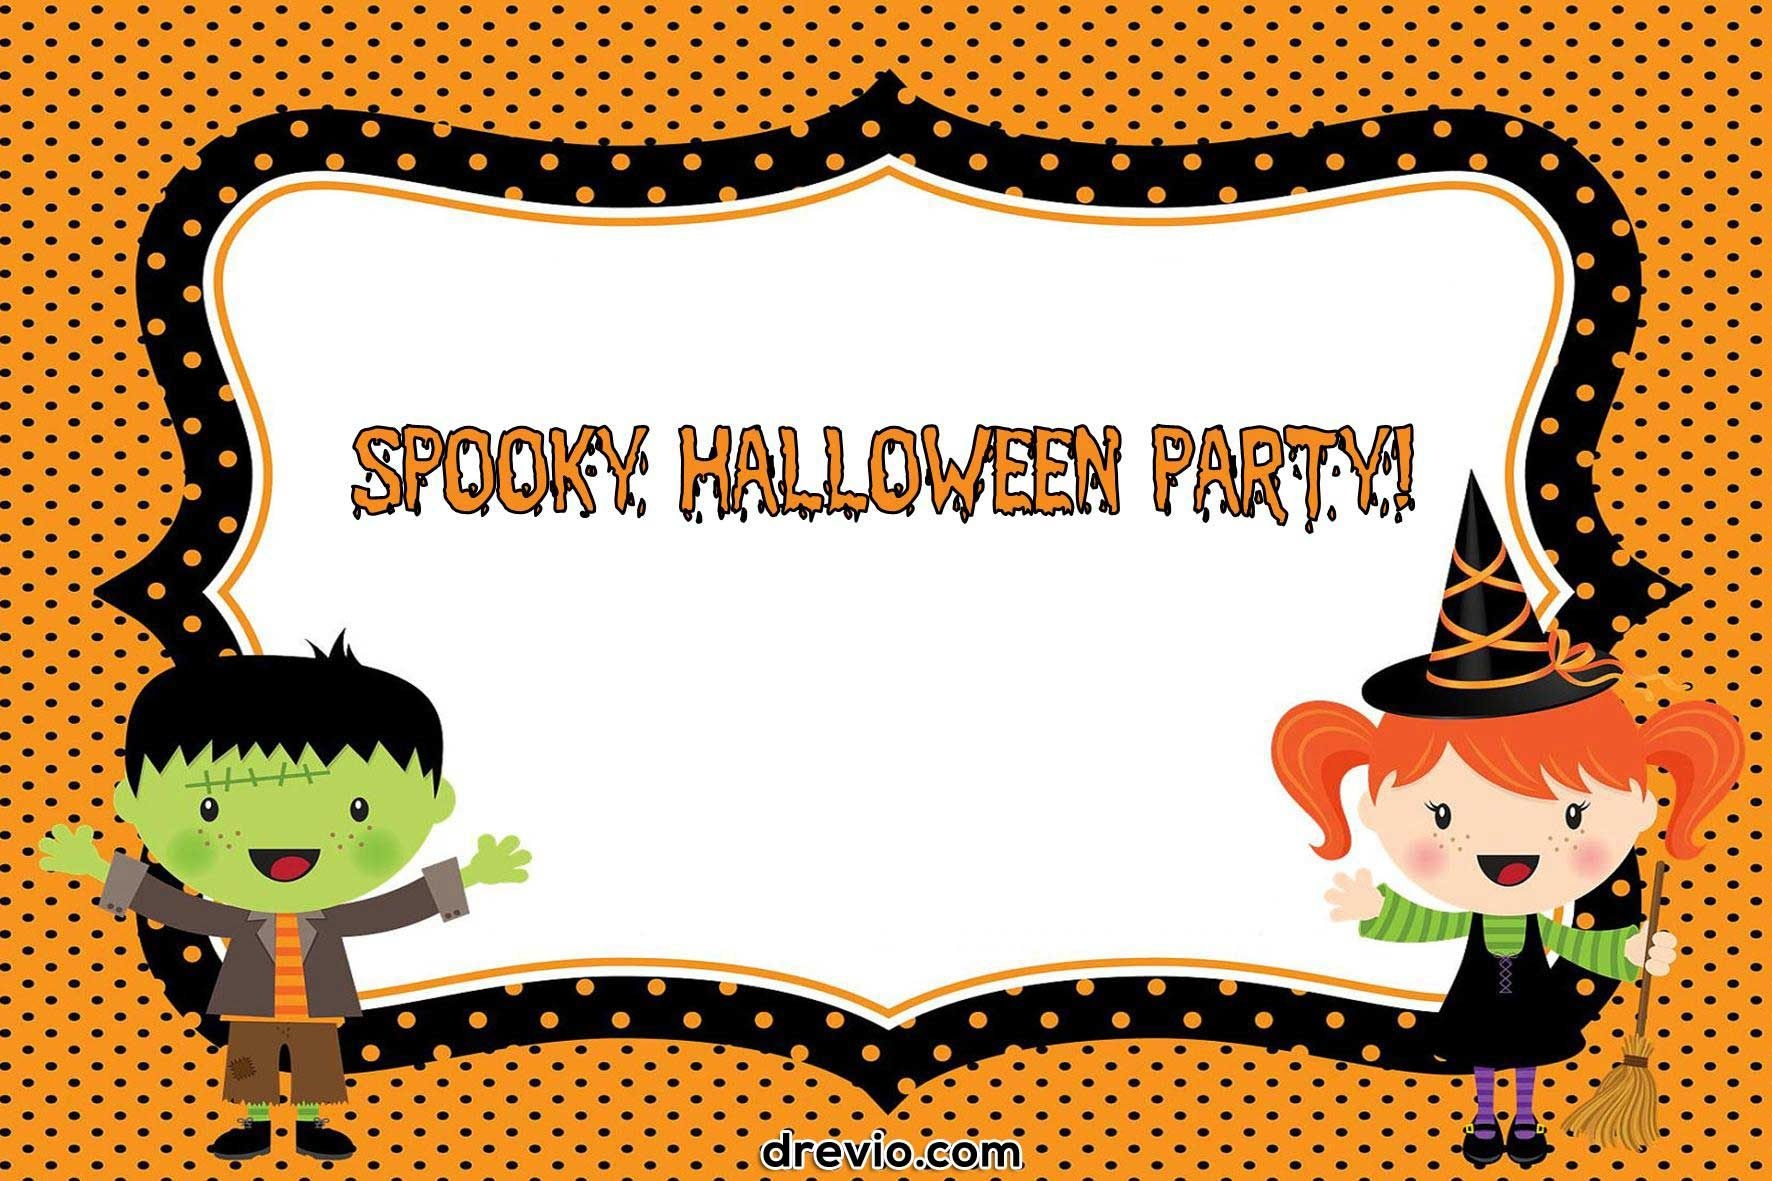 Free Printable Halloween Invitations Templates | Free Printable - Free Printable Halloween Birthday Party Invitations